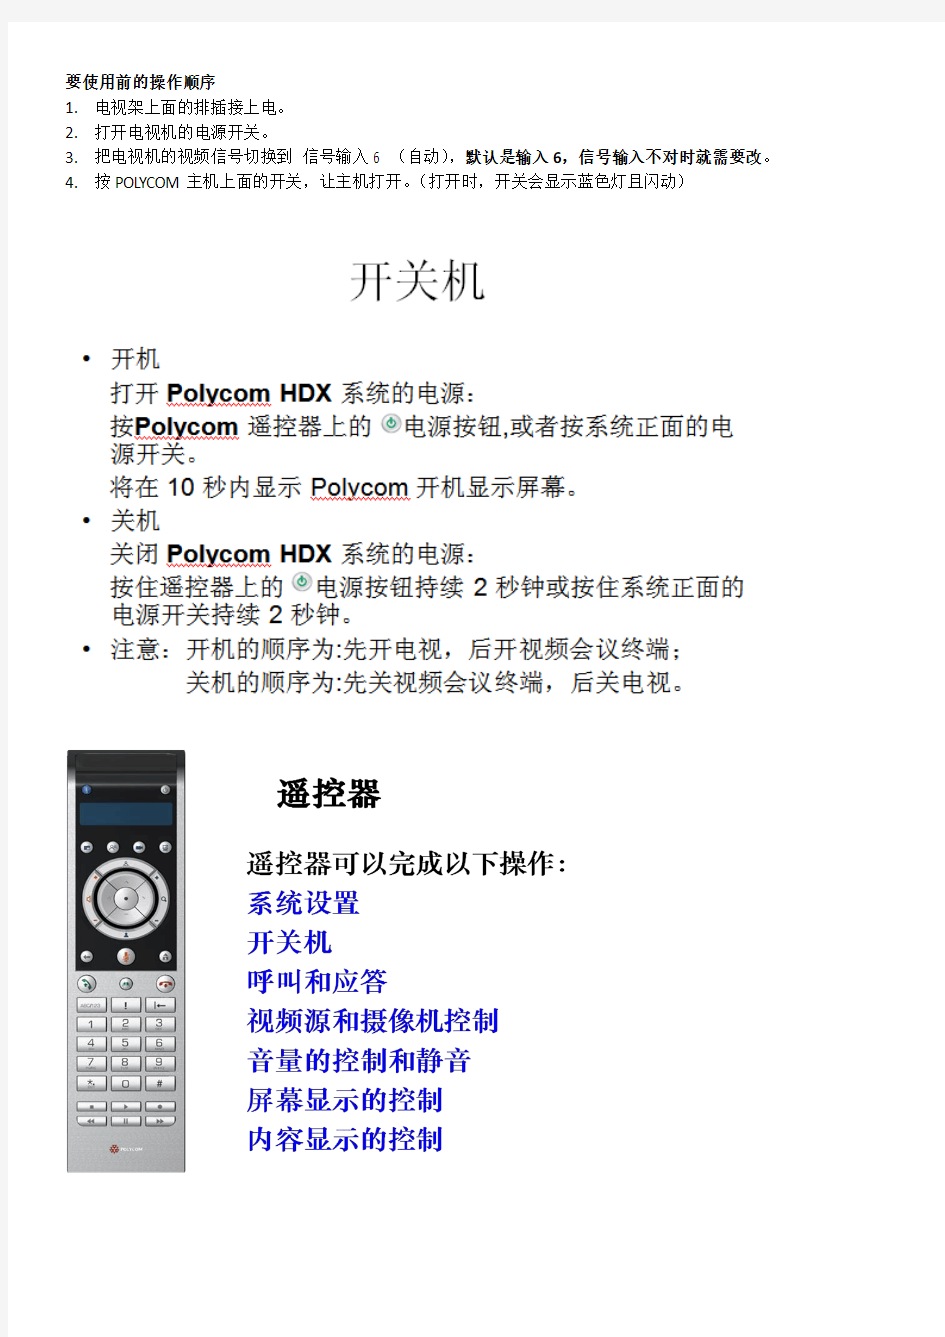 POLYCOM HDX7000操作手册-普通人员使用